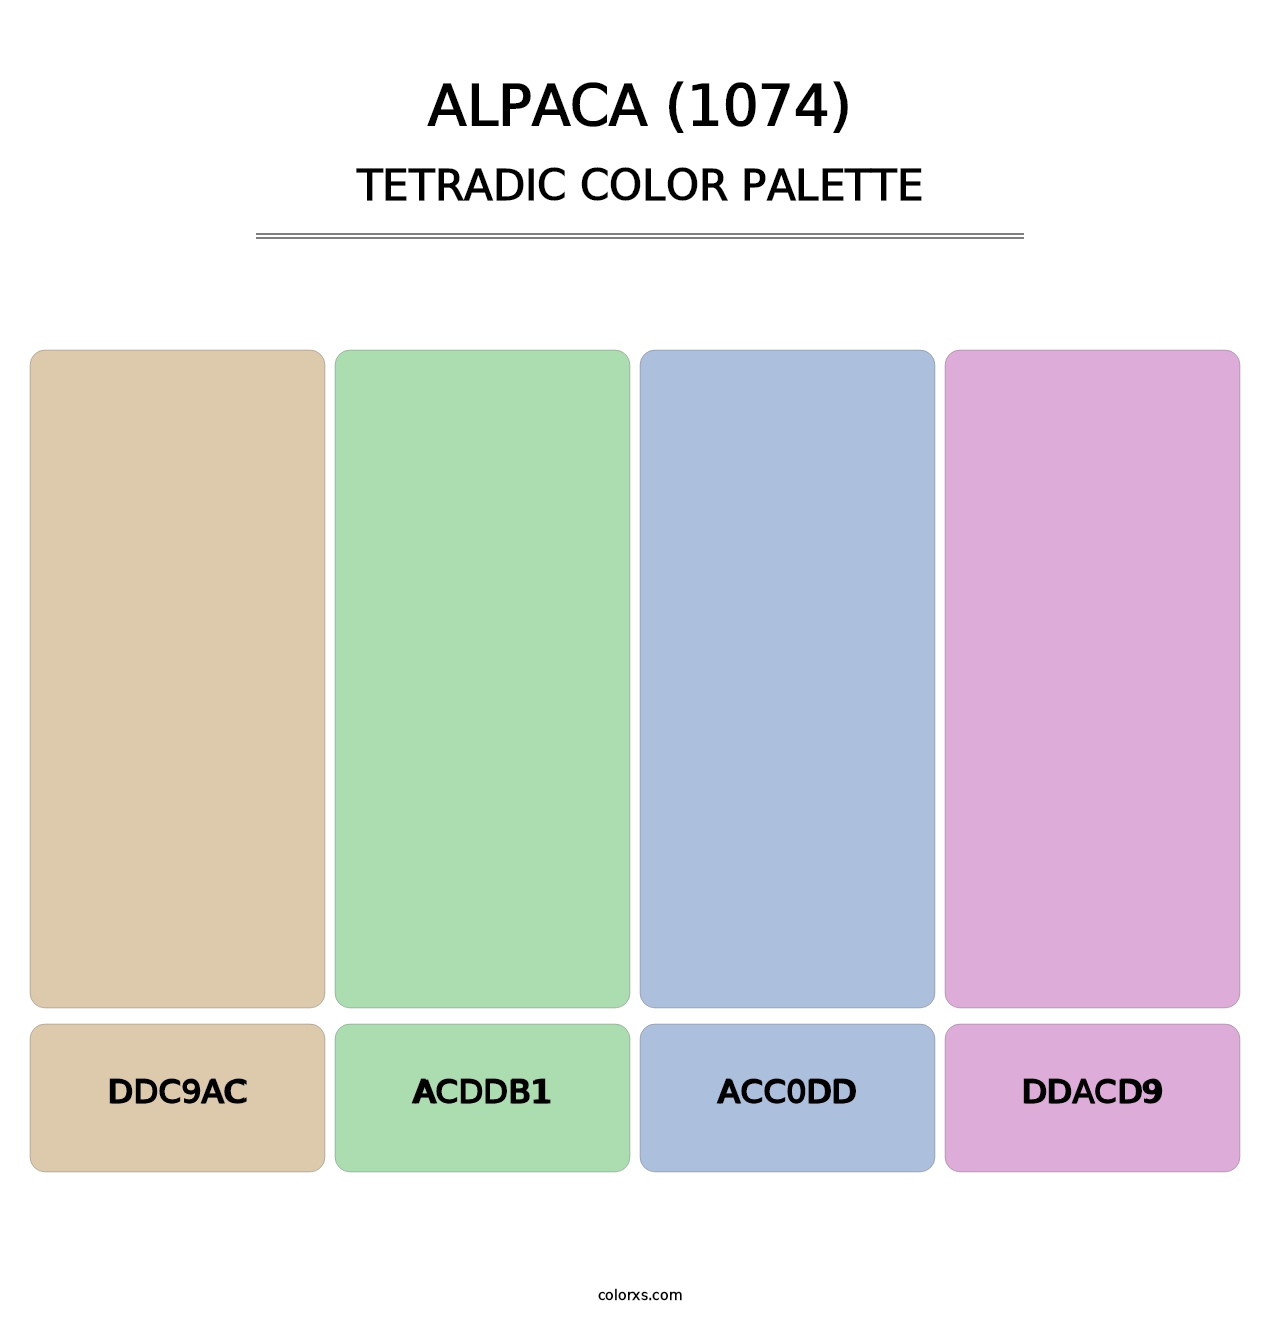 Alpaca (1074) - Tetradic Color Palette